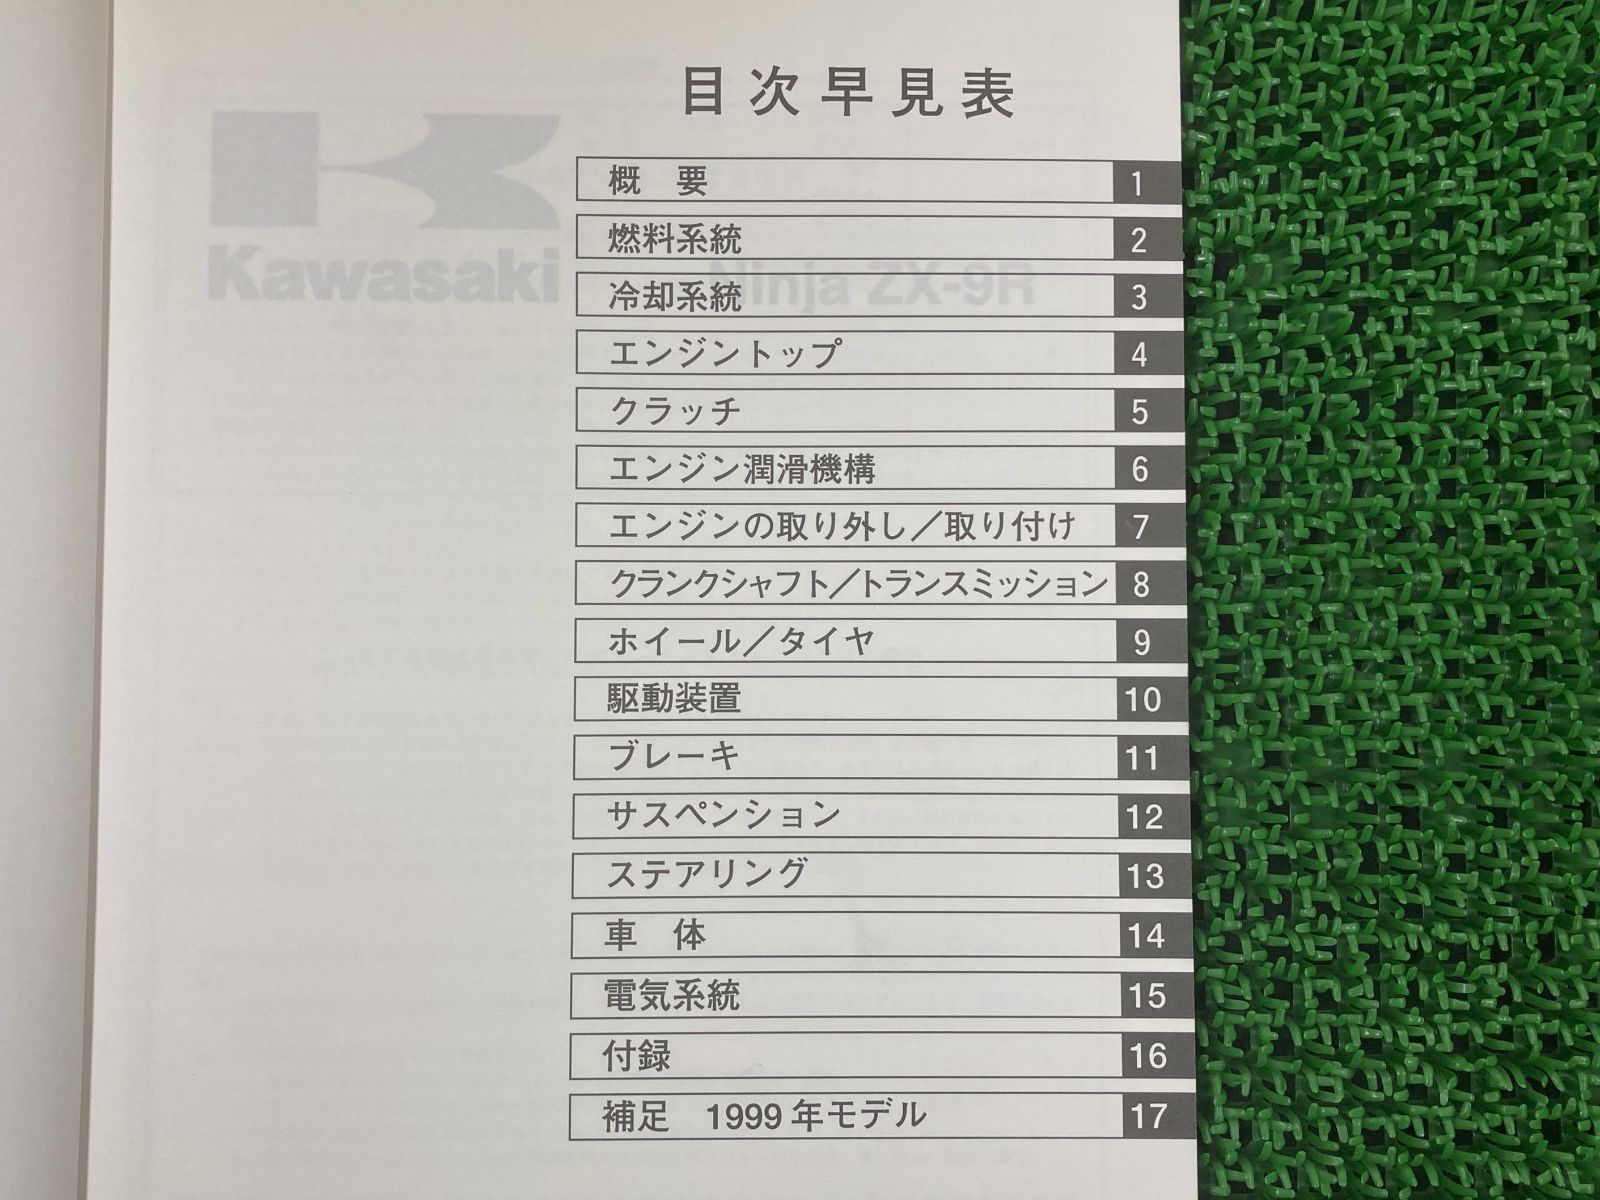 NinjaZX-9R サービスマニュアル 1版 カワサキ 正規  バイク 整備書 ZX900-C1 ZX900-D1 ZX900-C2 ZX900-D2 配線図有り 車検 整備情報:22289558